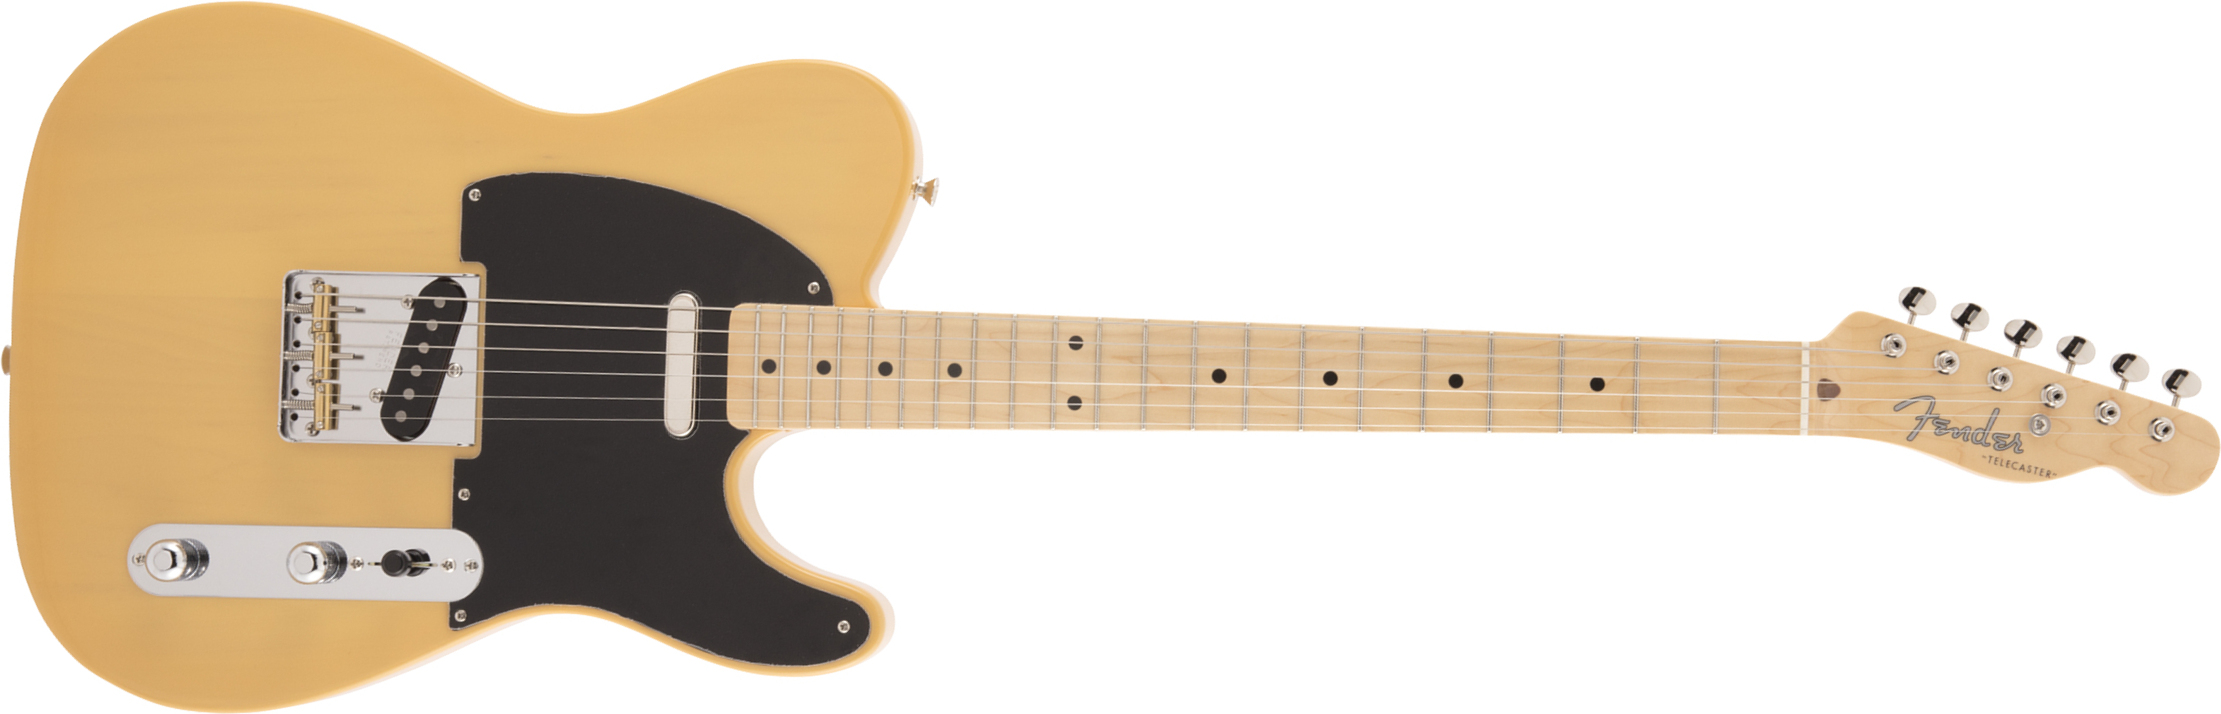 Fender Tele Traditional 50s Jap Mn - Butterscotch Blonde - Televorm elektrische gitaar - Main picture